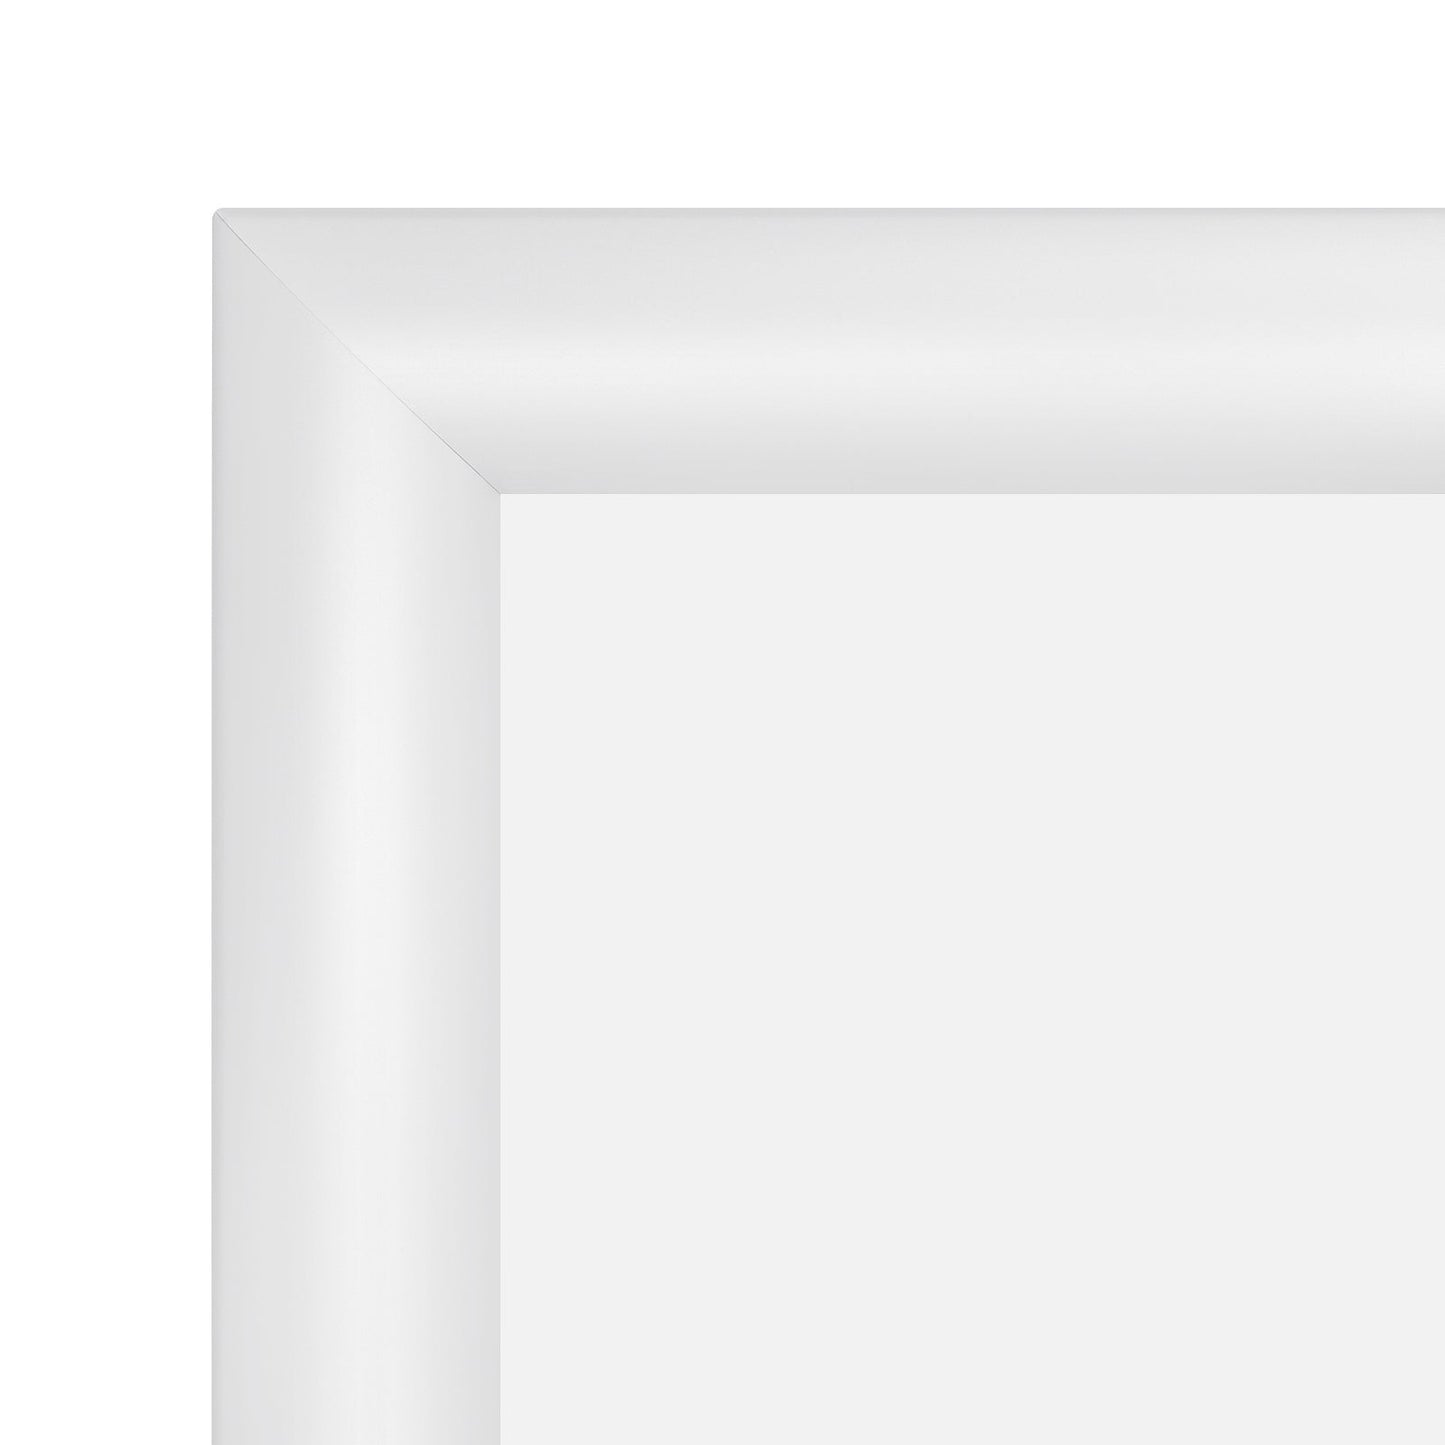 15x23 White SnapeZo® Snap Frame - 1.2" Profile - Snap Frames Direct